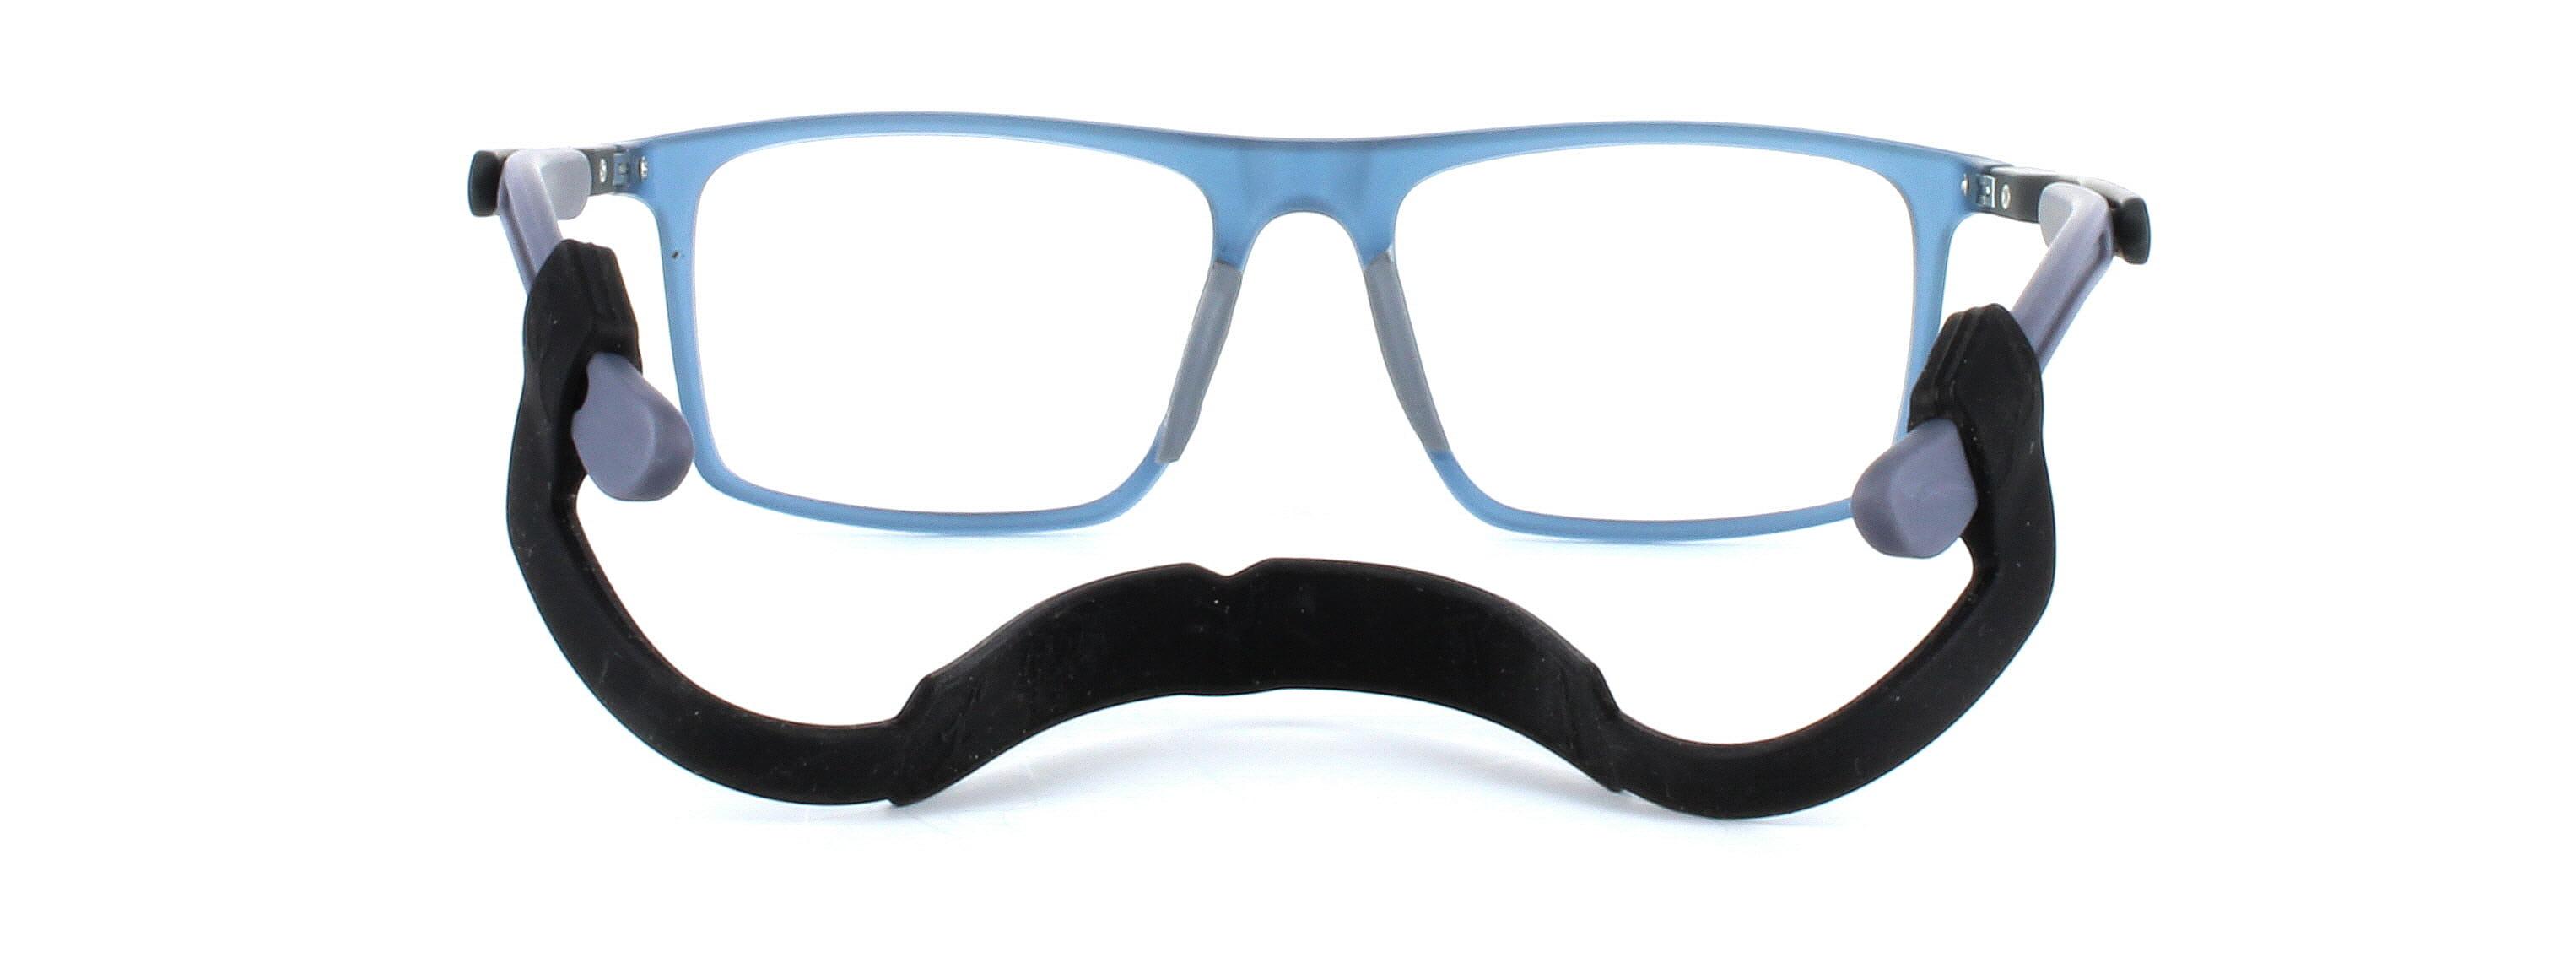 Jumper - unisex prescription sports glasses in matt blue - image view 3